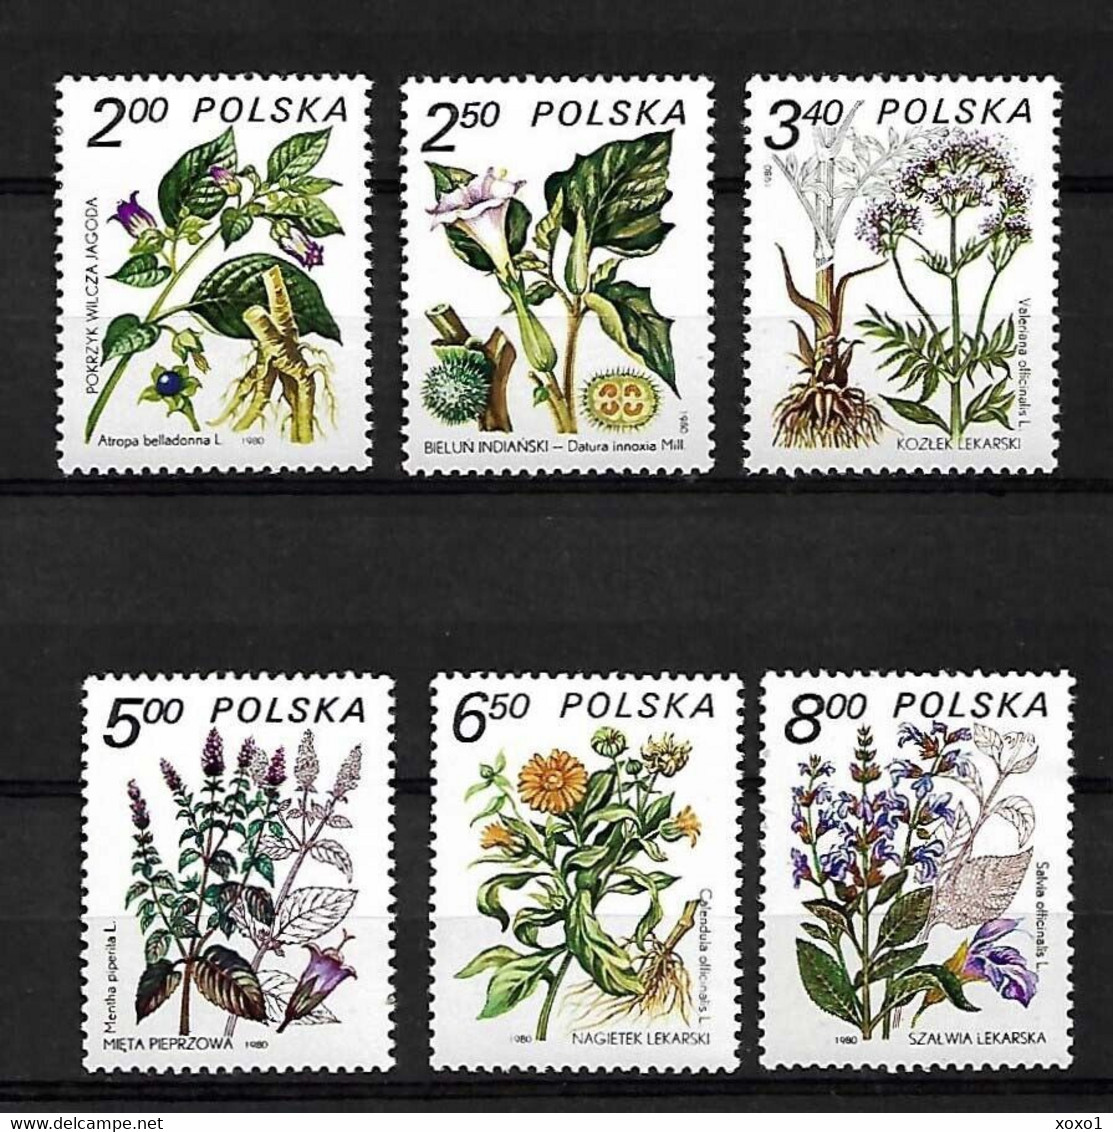 Poland 1980 MiNr. 2706 - 2711 Polen Medicinal Plants 6v MNH**  3.00 € - Medicinal Plants